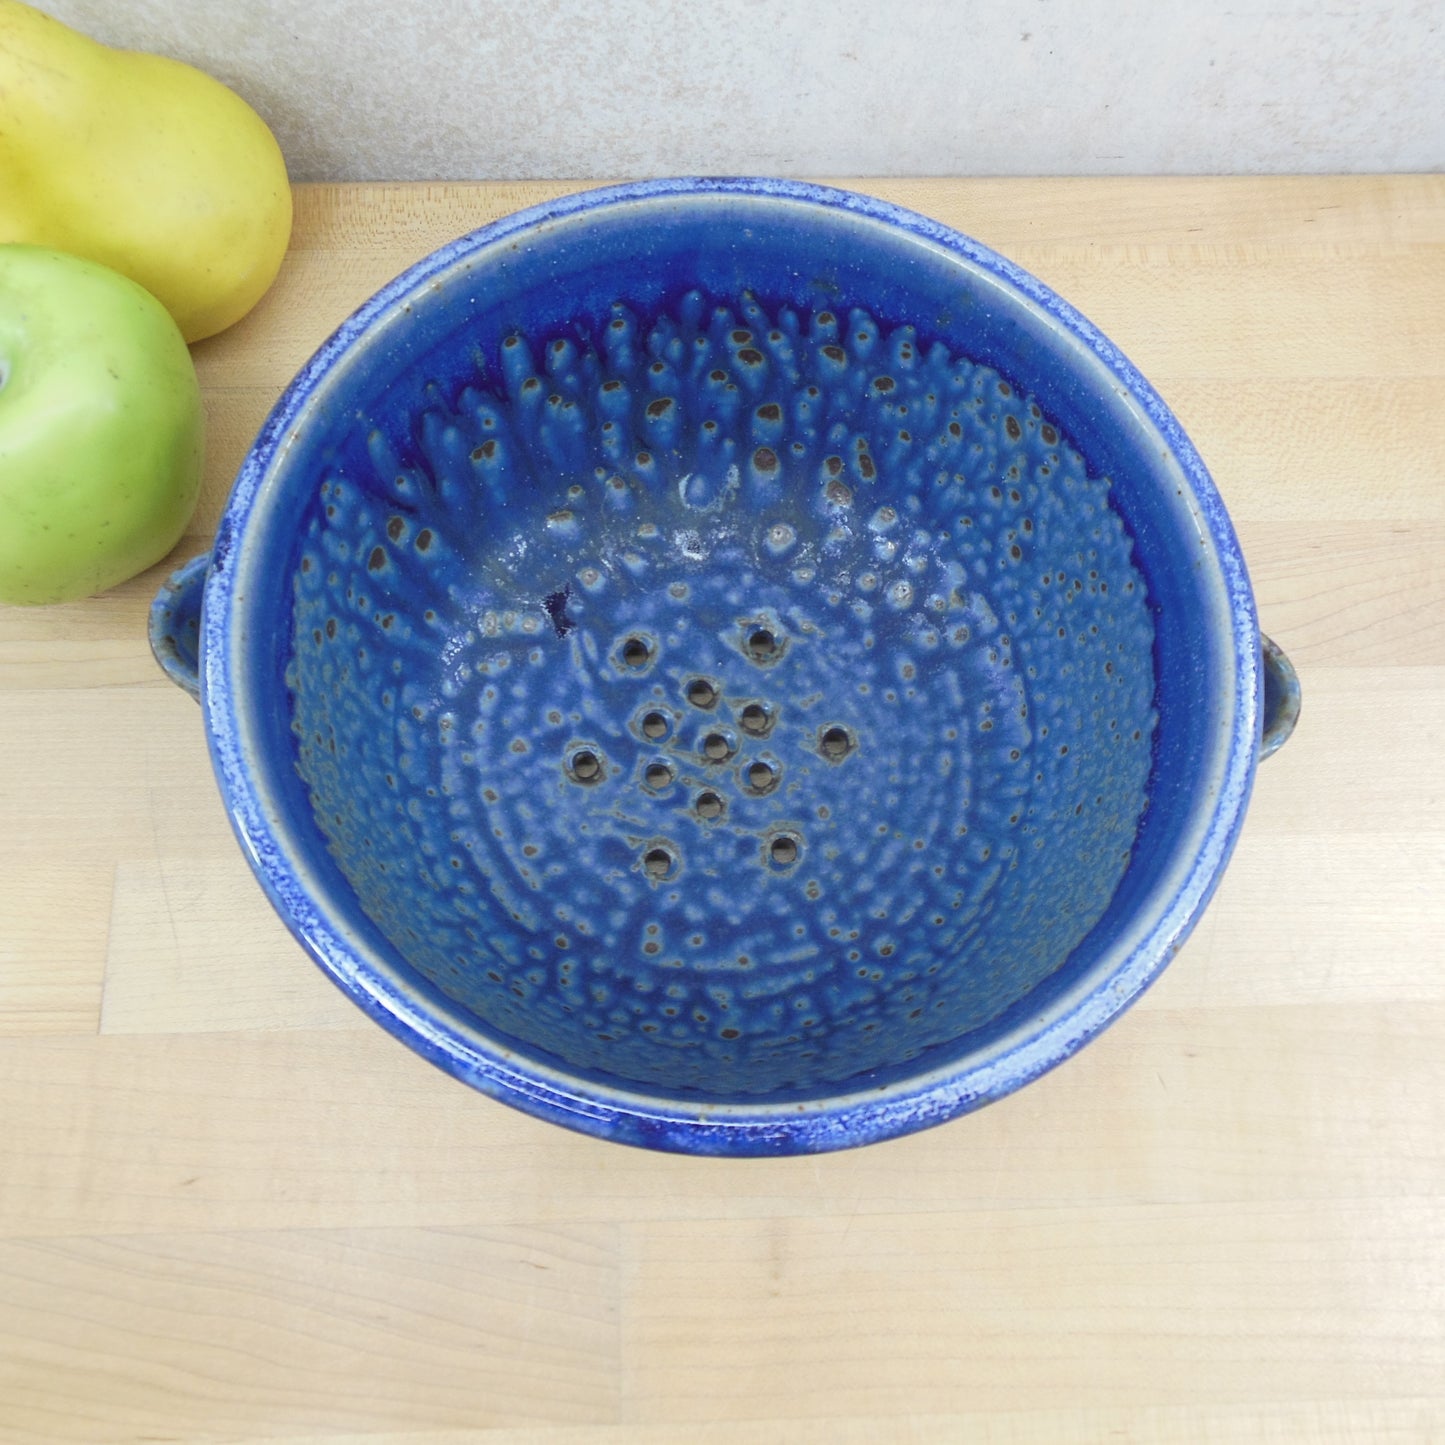 Sanibel Pottery 1997 Blue Glaze Berry Bowl Holes Perforated Vintage